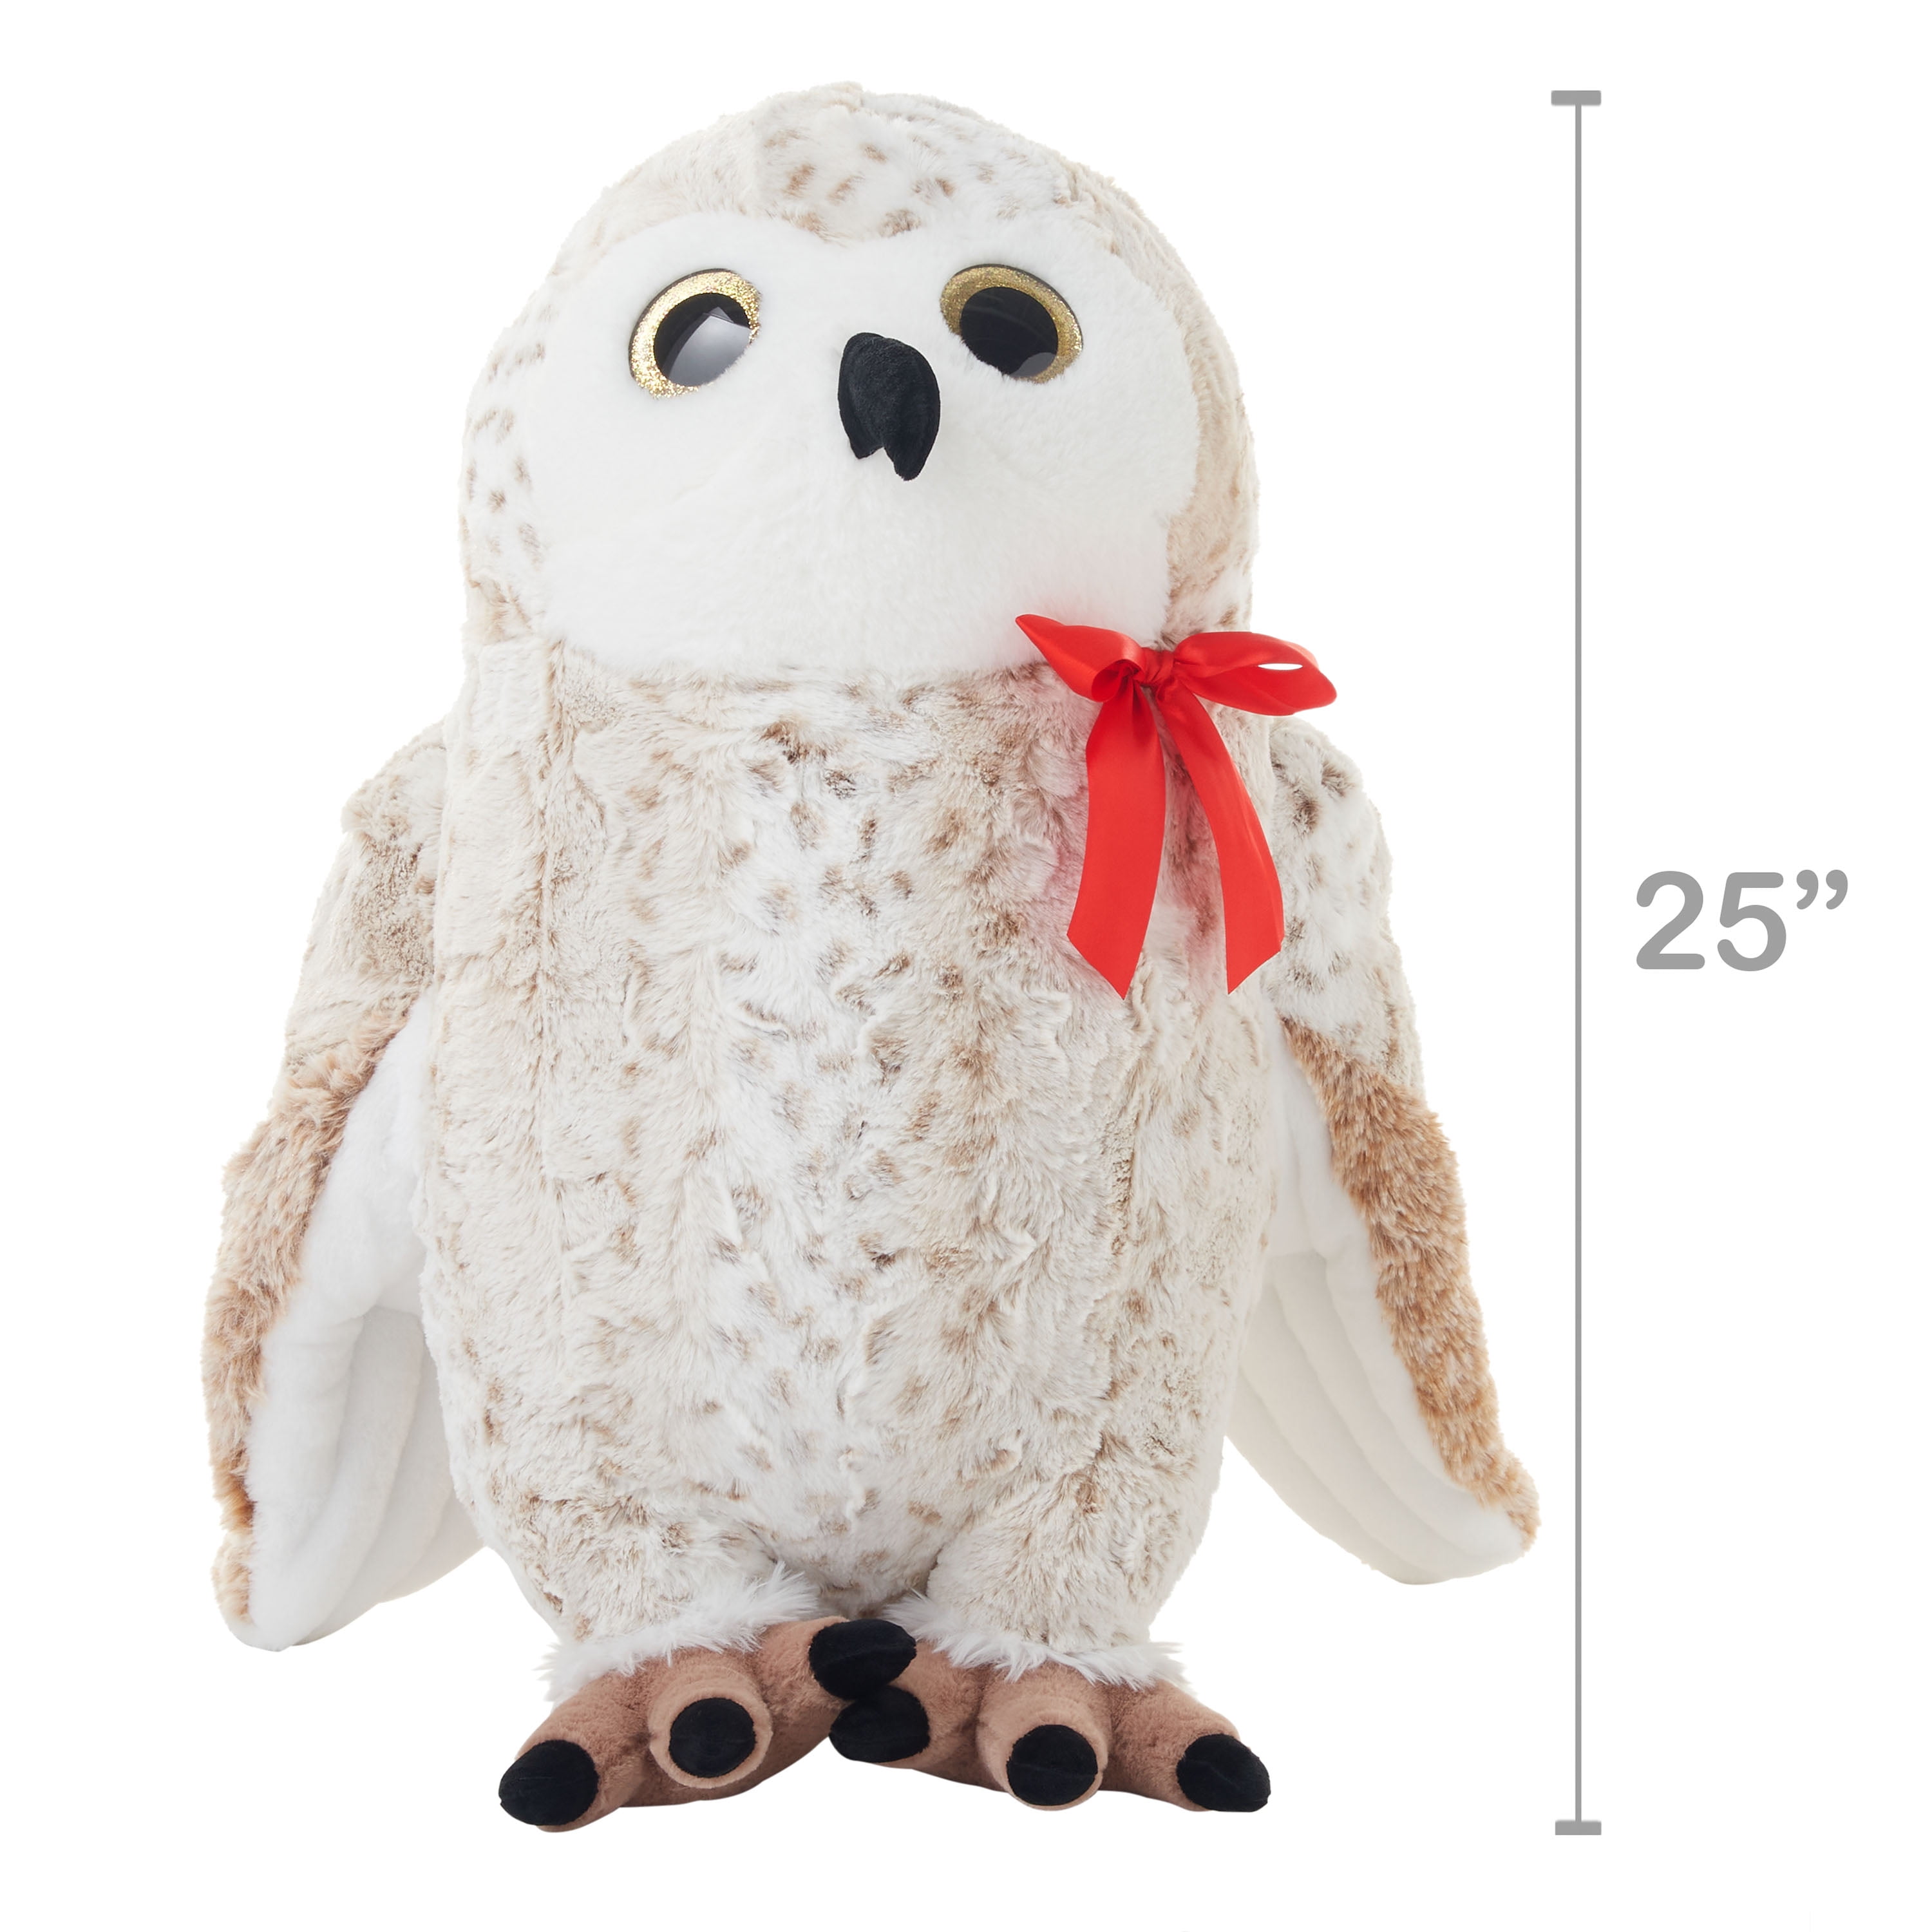 OWL Sitting Plush Stuffed Animal Cushion Learning Resources Miniature Toys